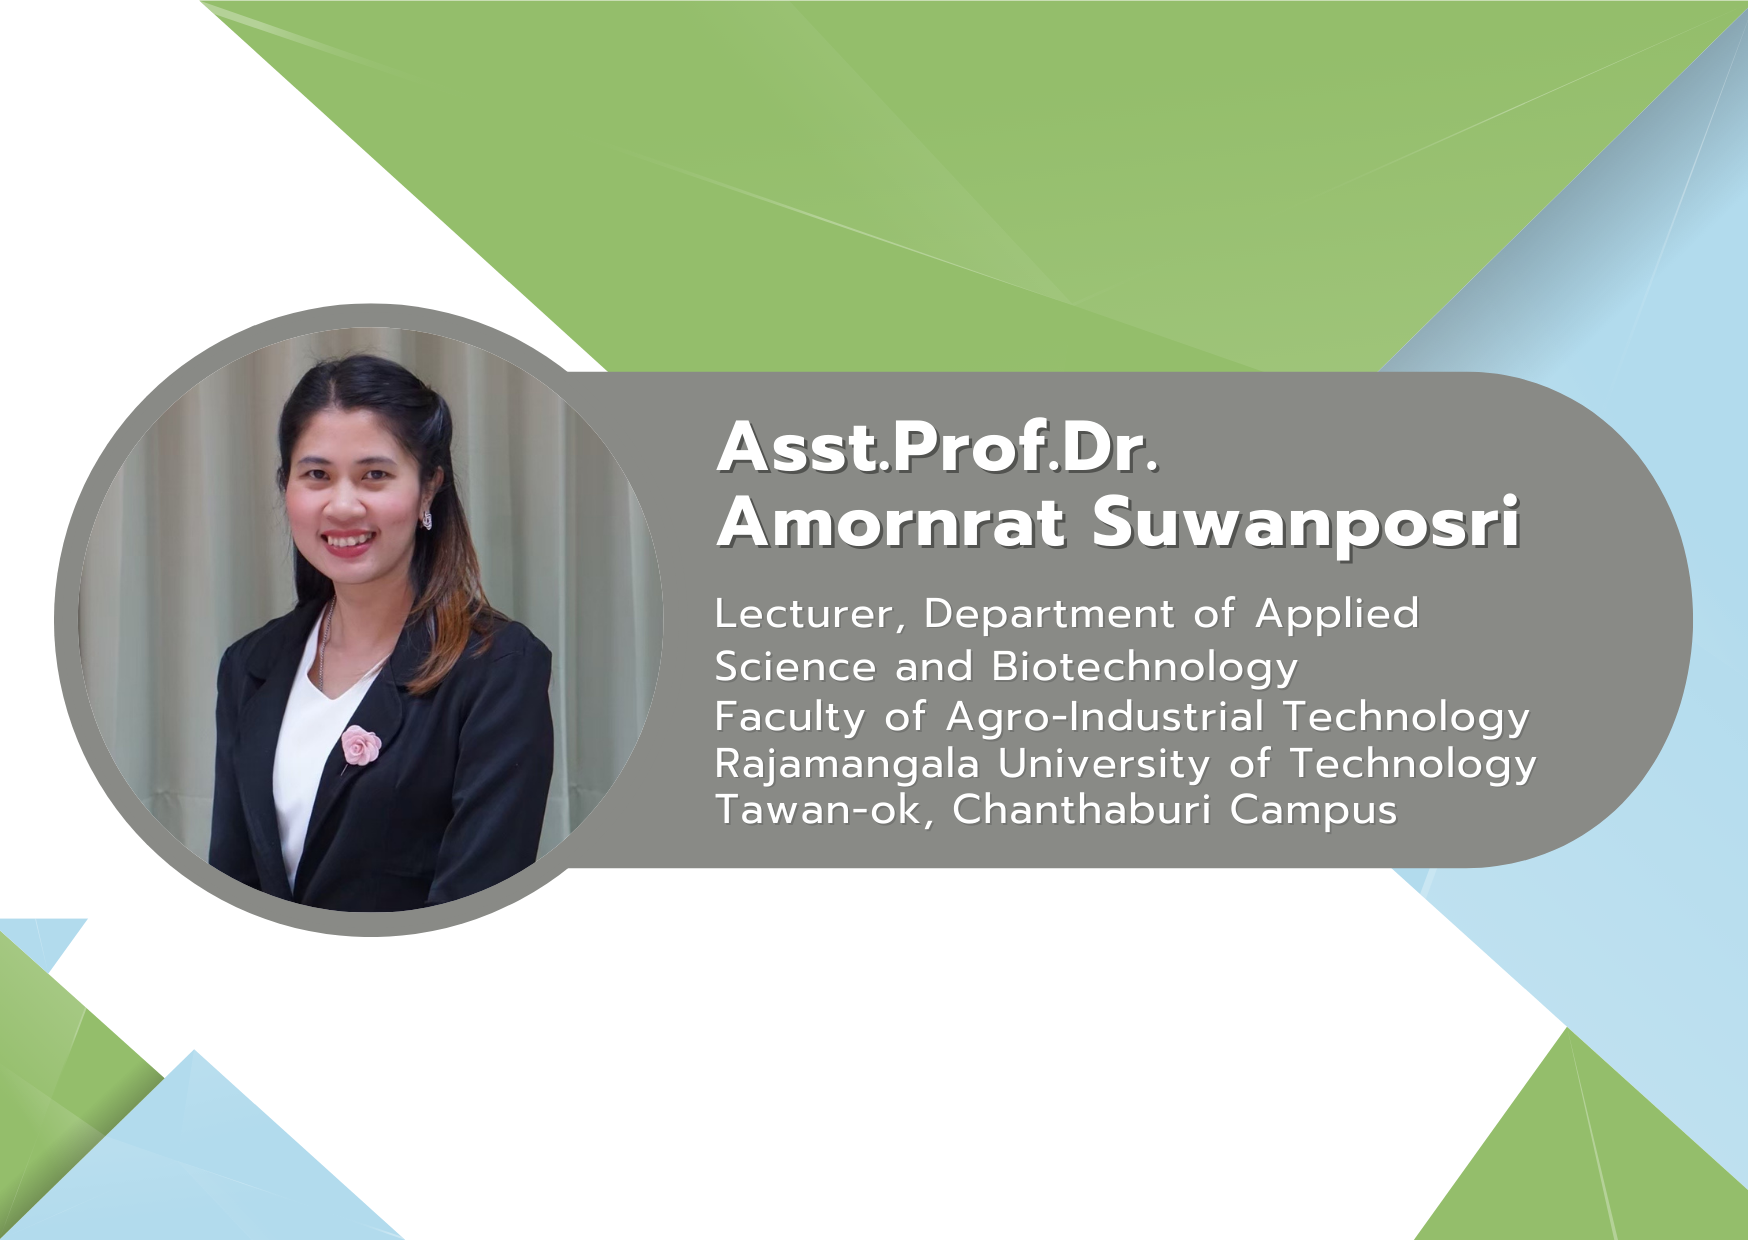 Asst.Prof.Dr. Amornrat Suwanposri